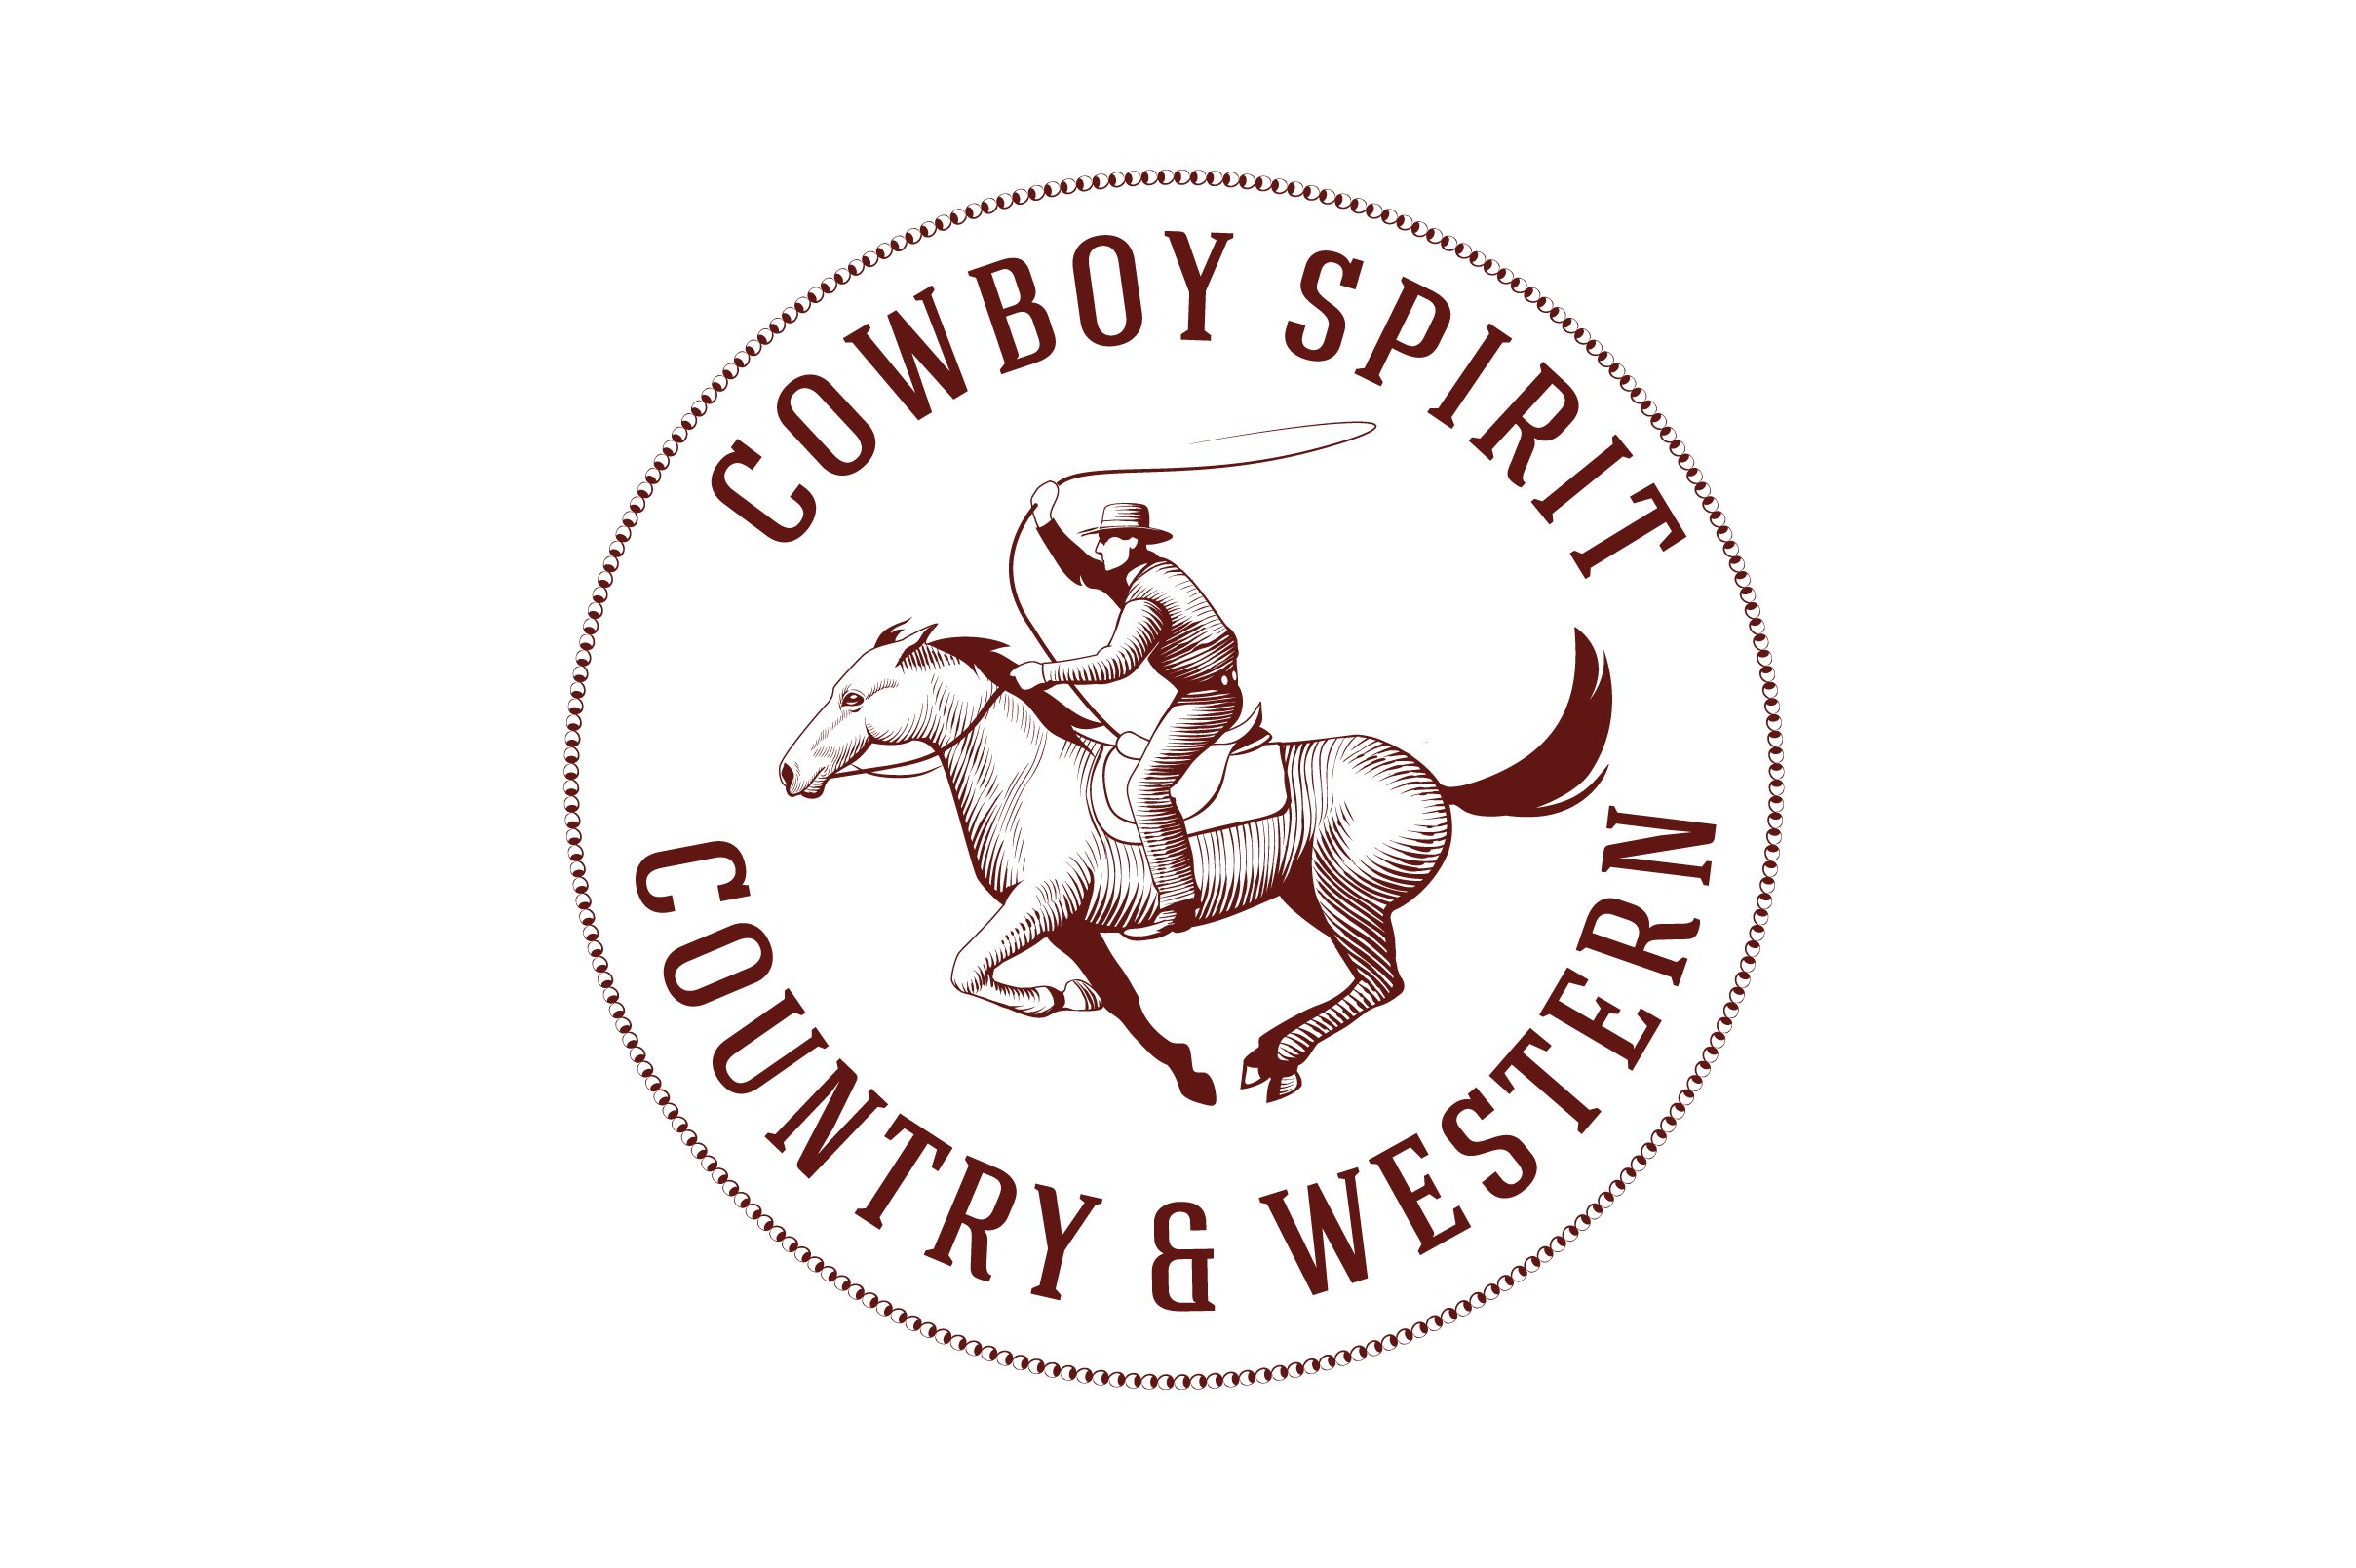 Cowboy Vintage Logo cover image.